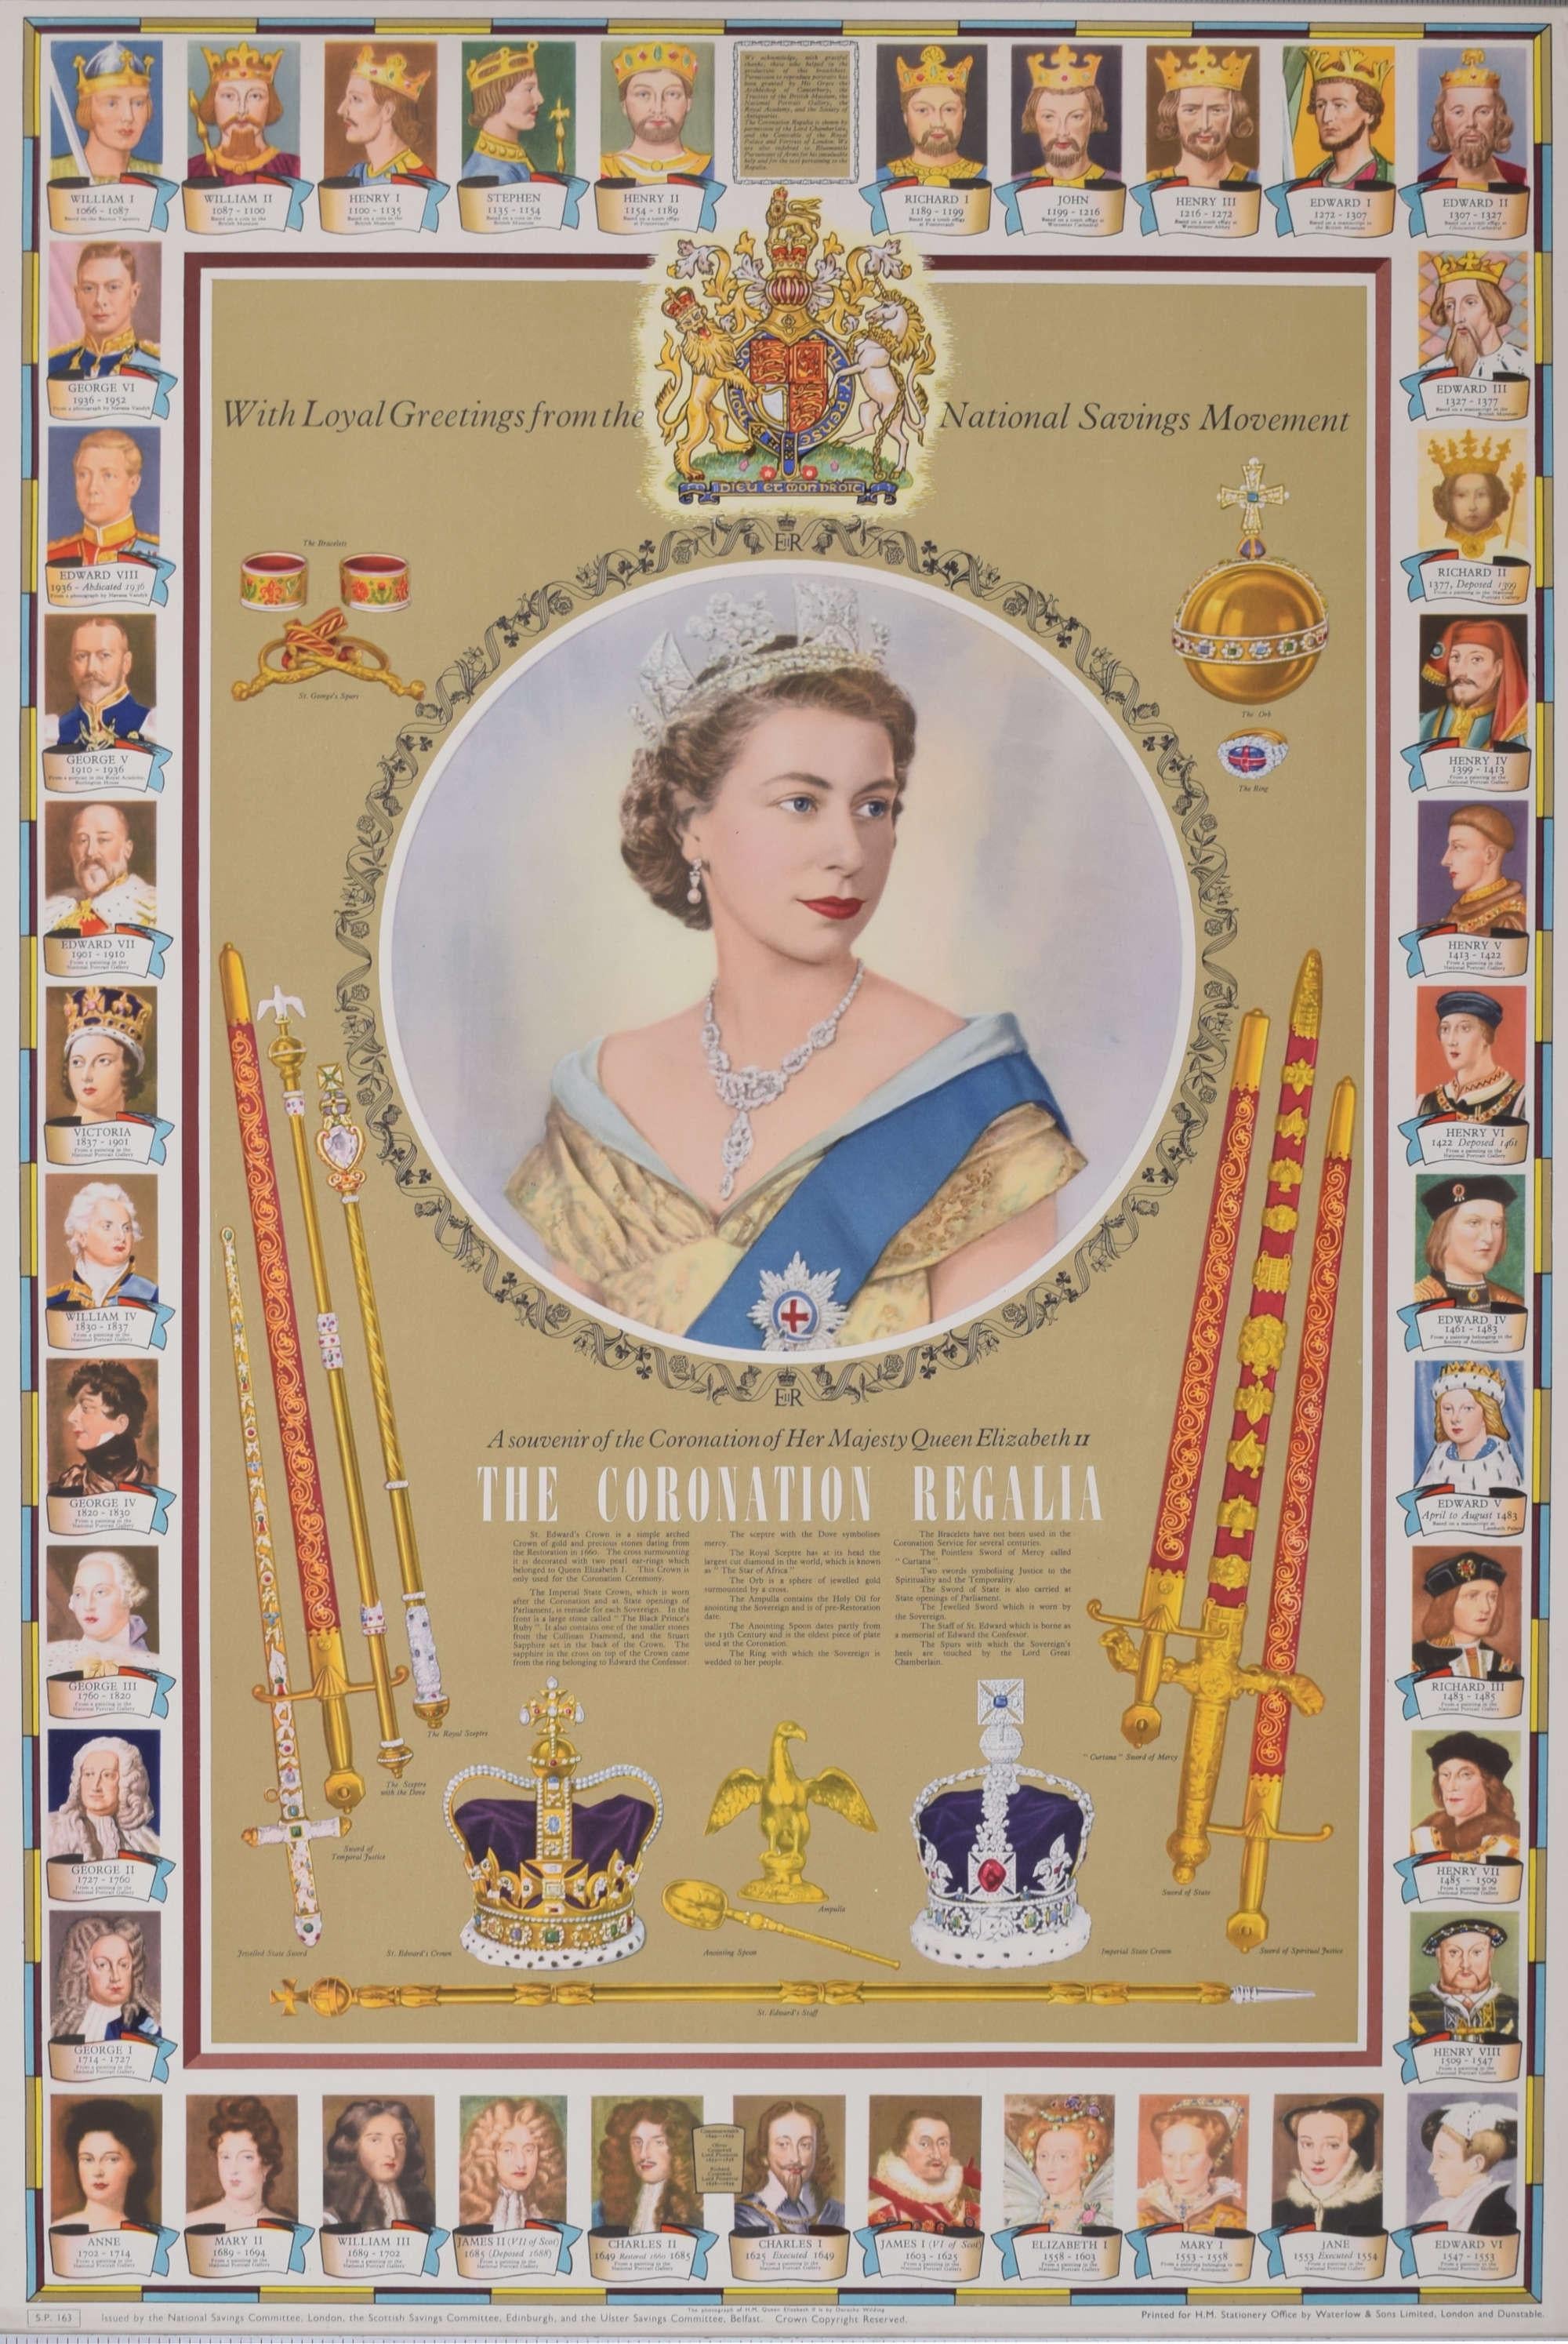 Dorothy Wilding Portrait Print - 1953 Coronation Regalia of Queen Elizabeth II poster for National Savings